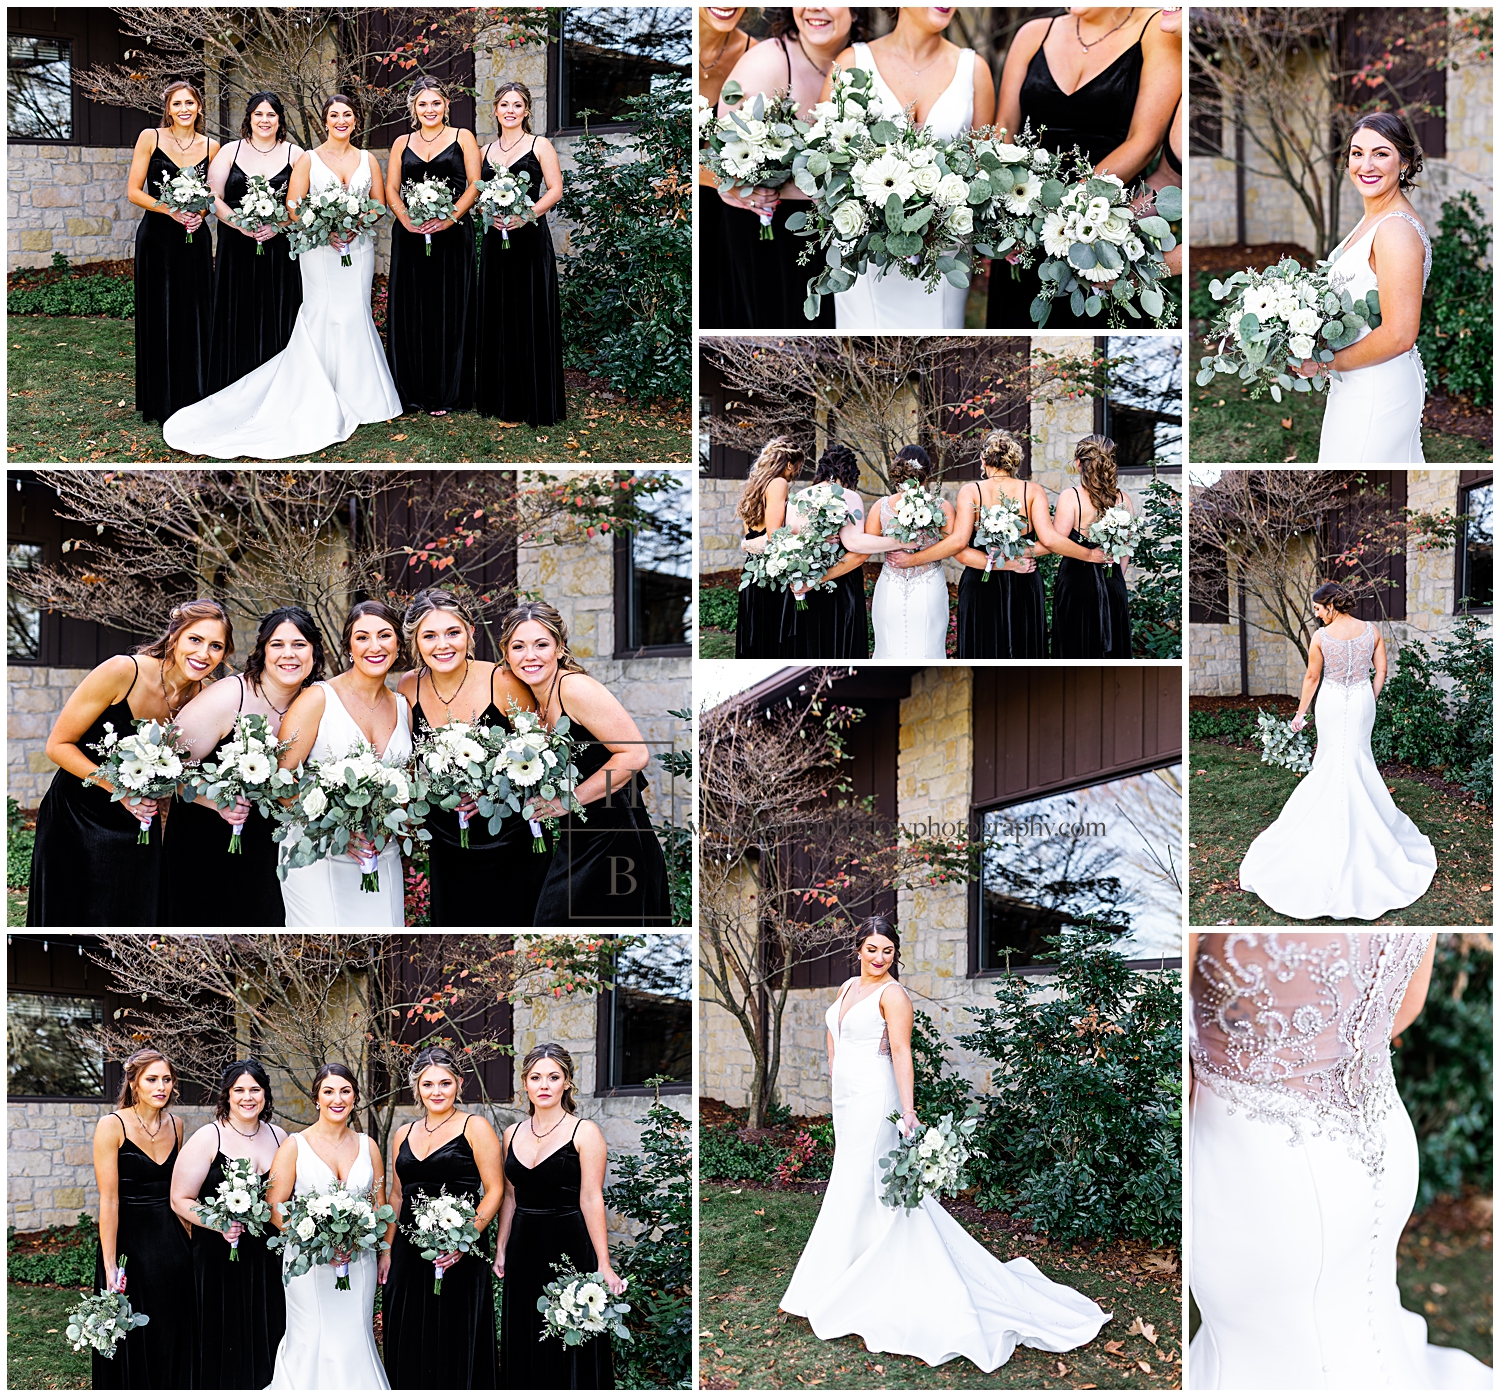 Women in black velvet dresses pose with bride for wedding photos.